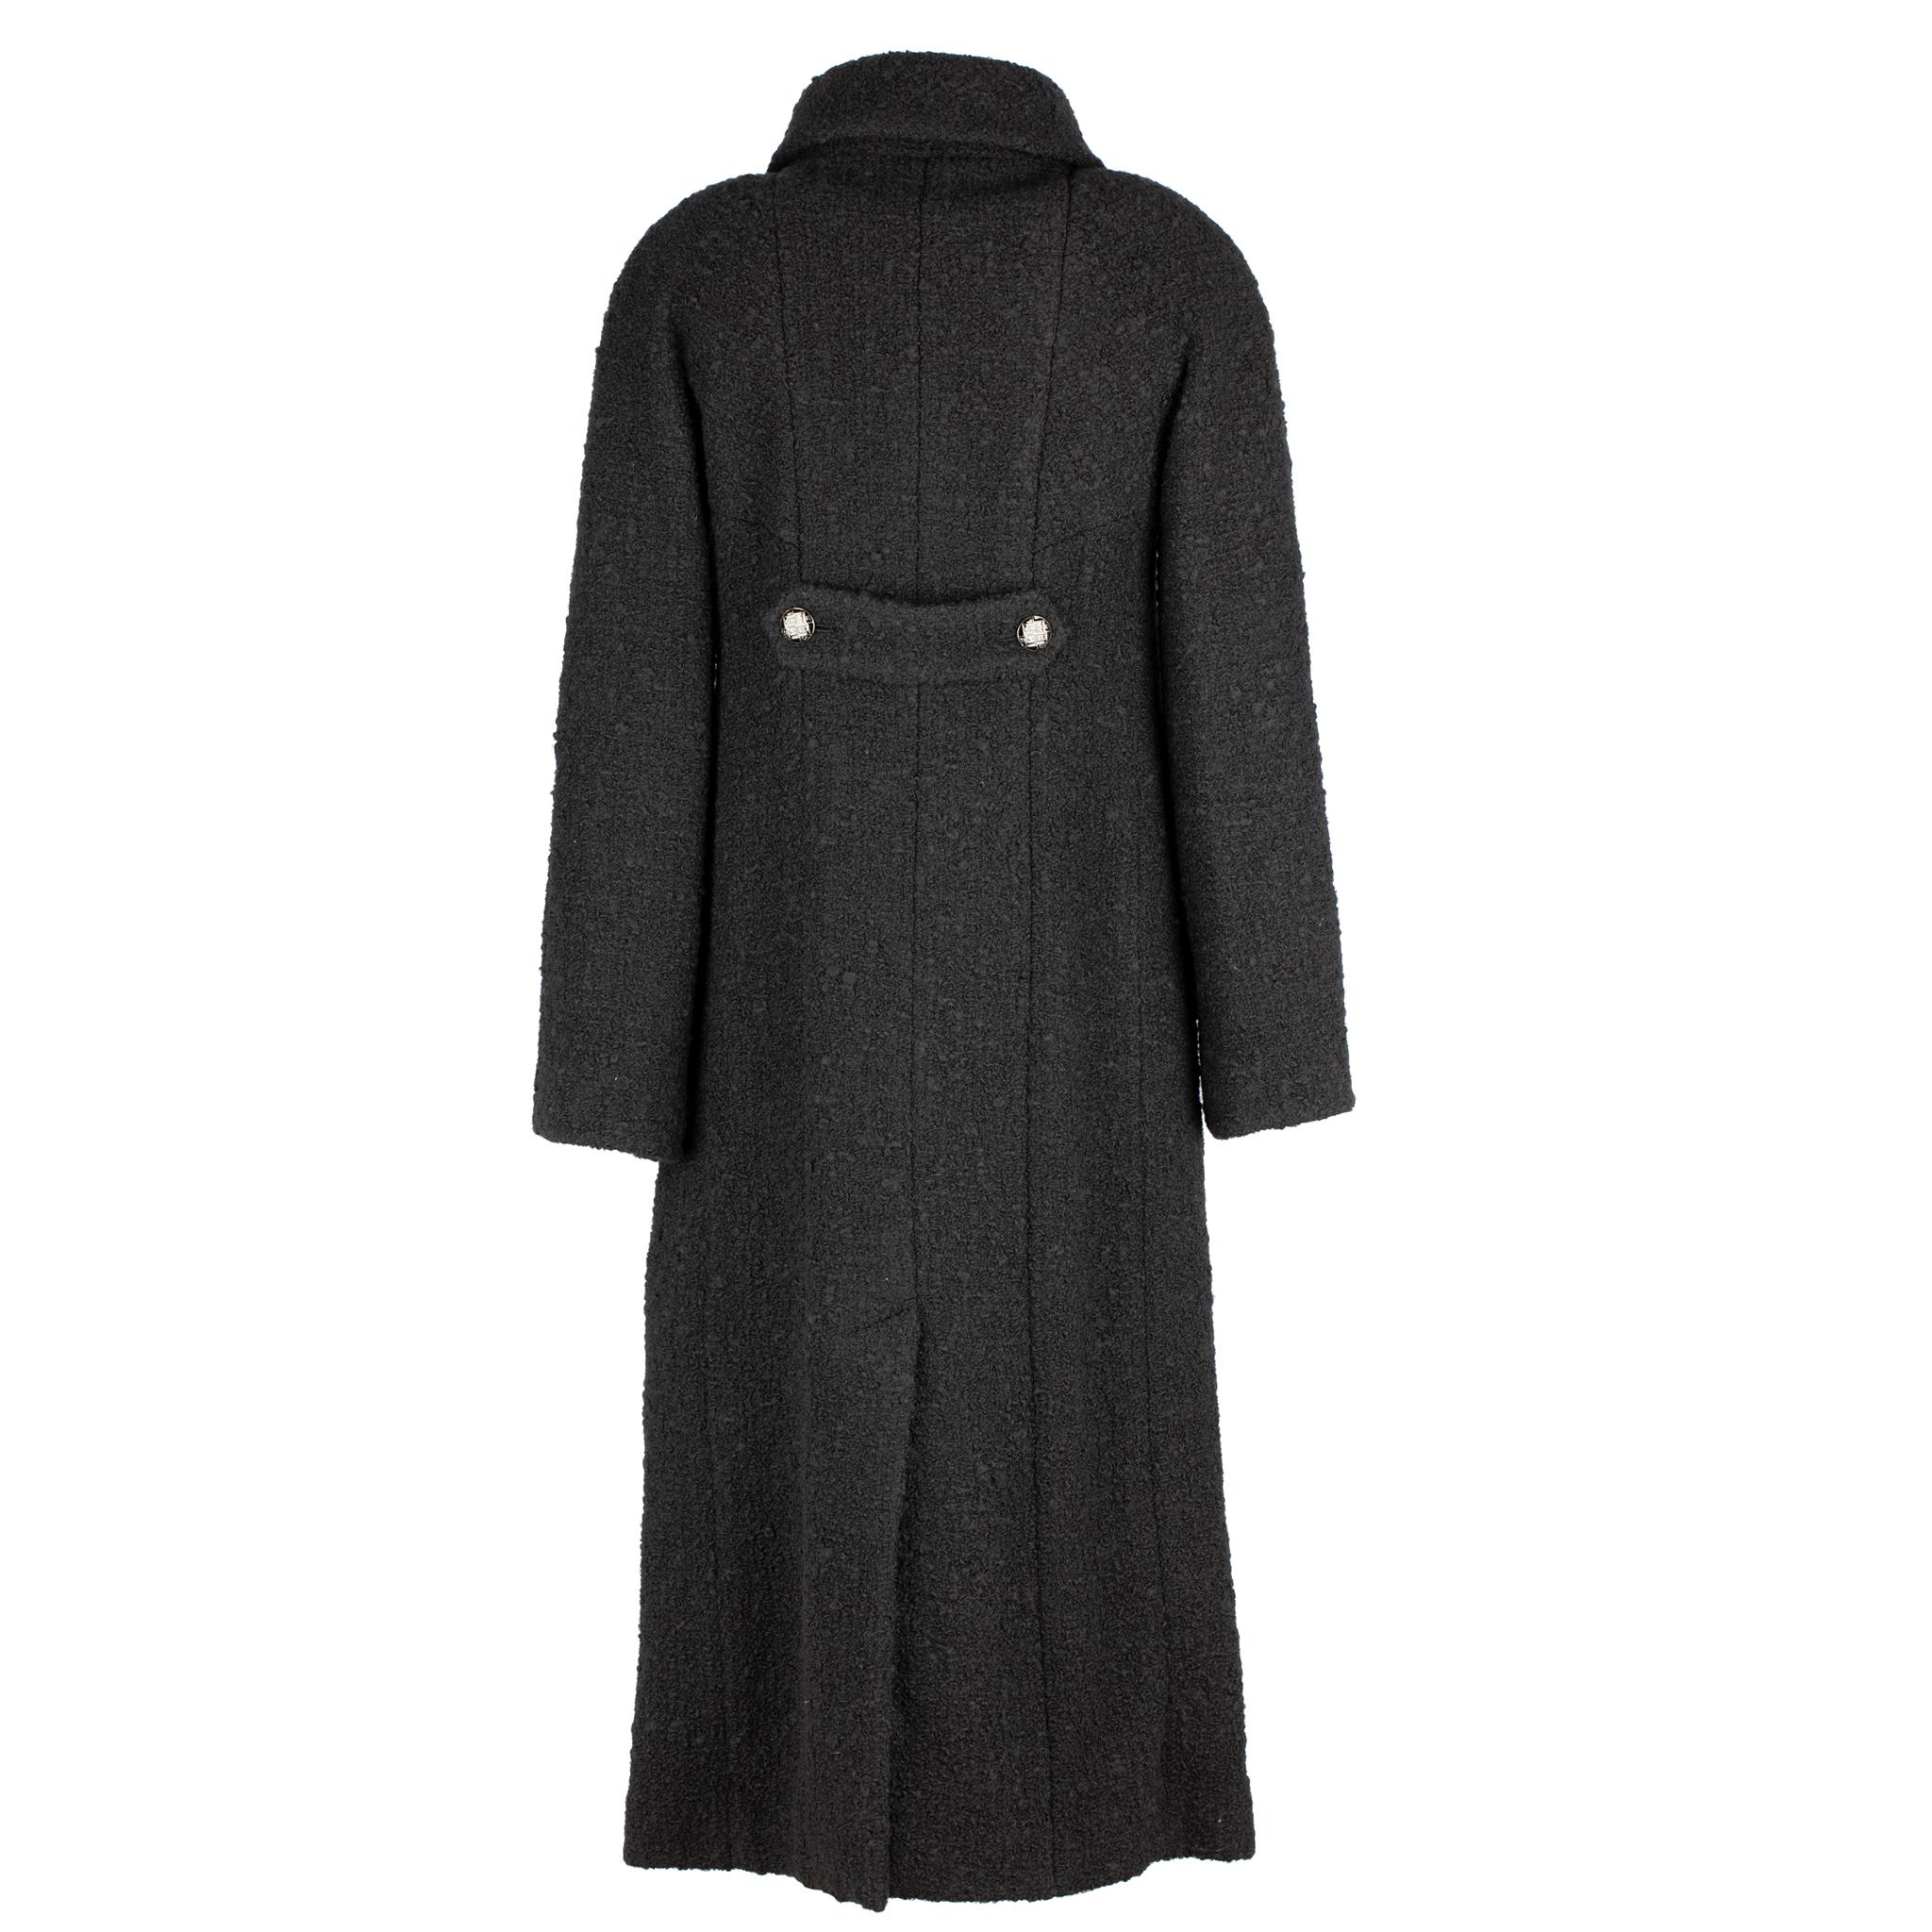 Chanel Black Long Tweed Coat 36 FR 6